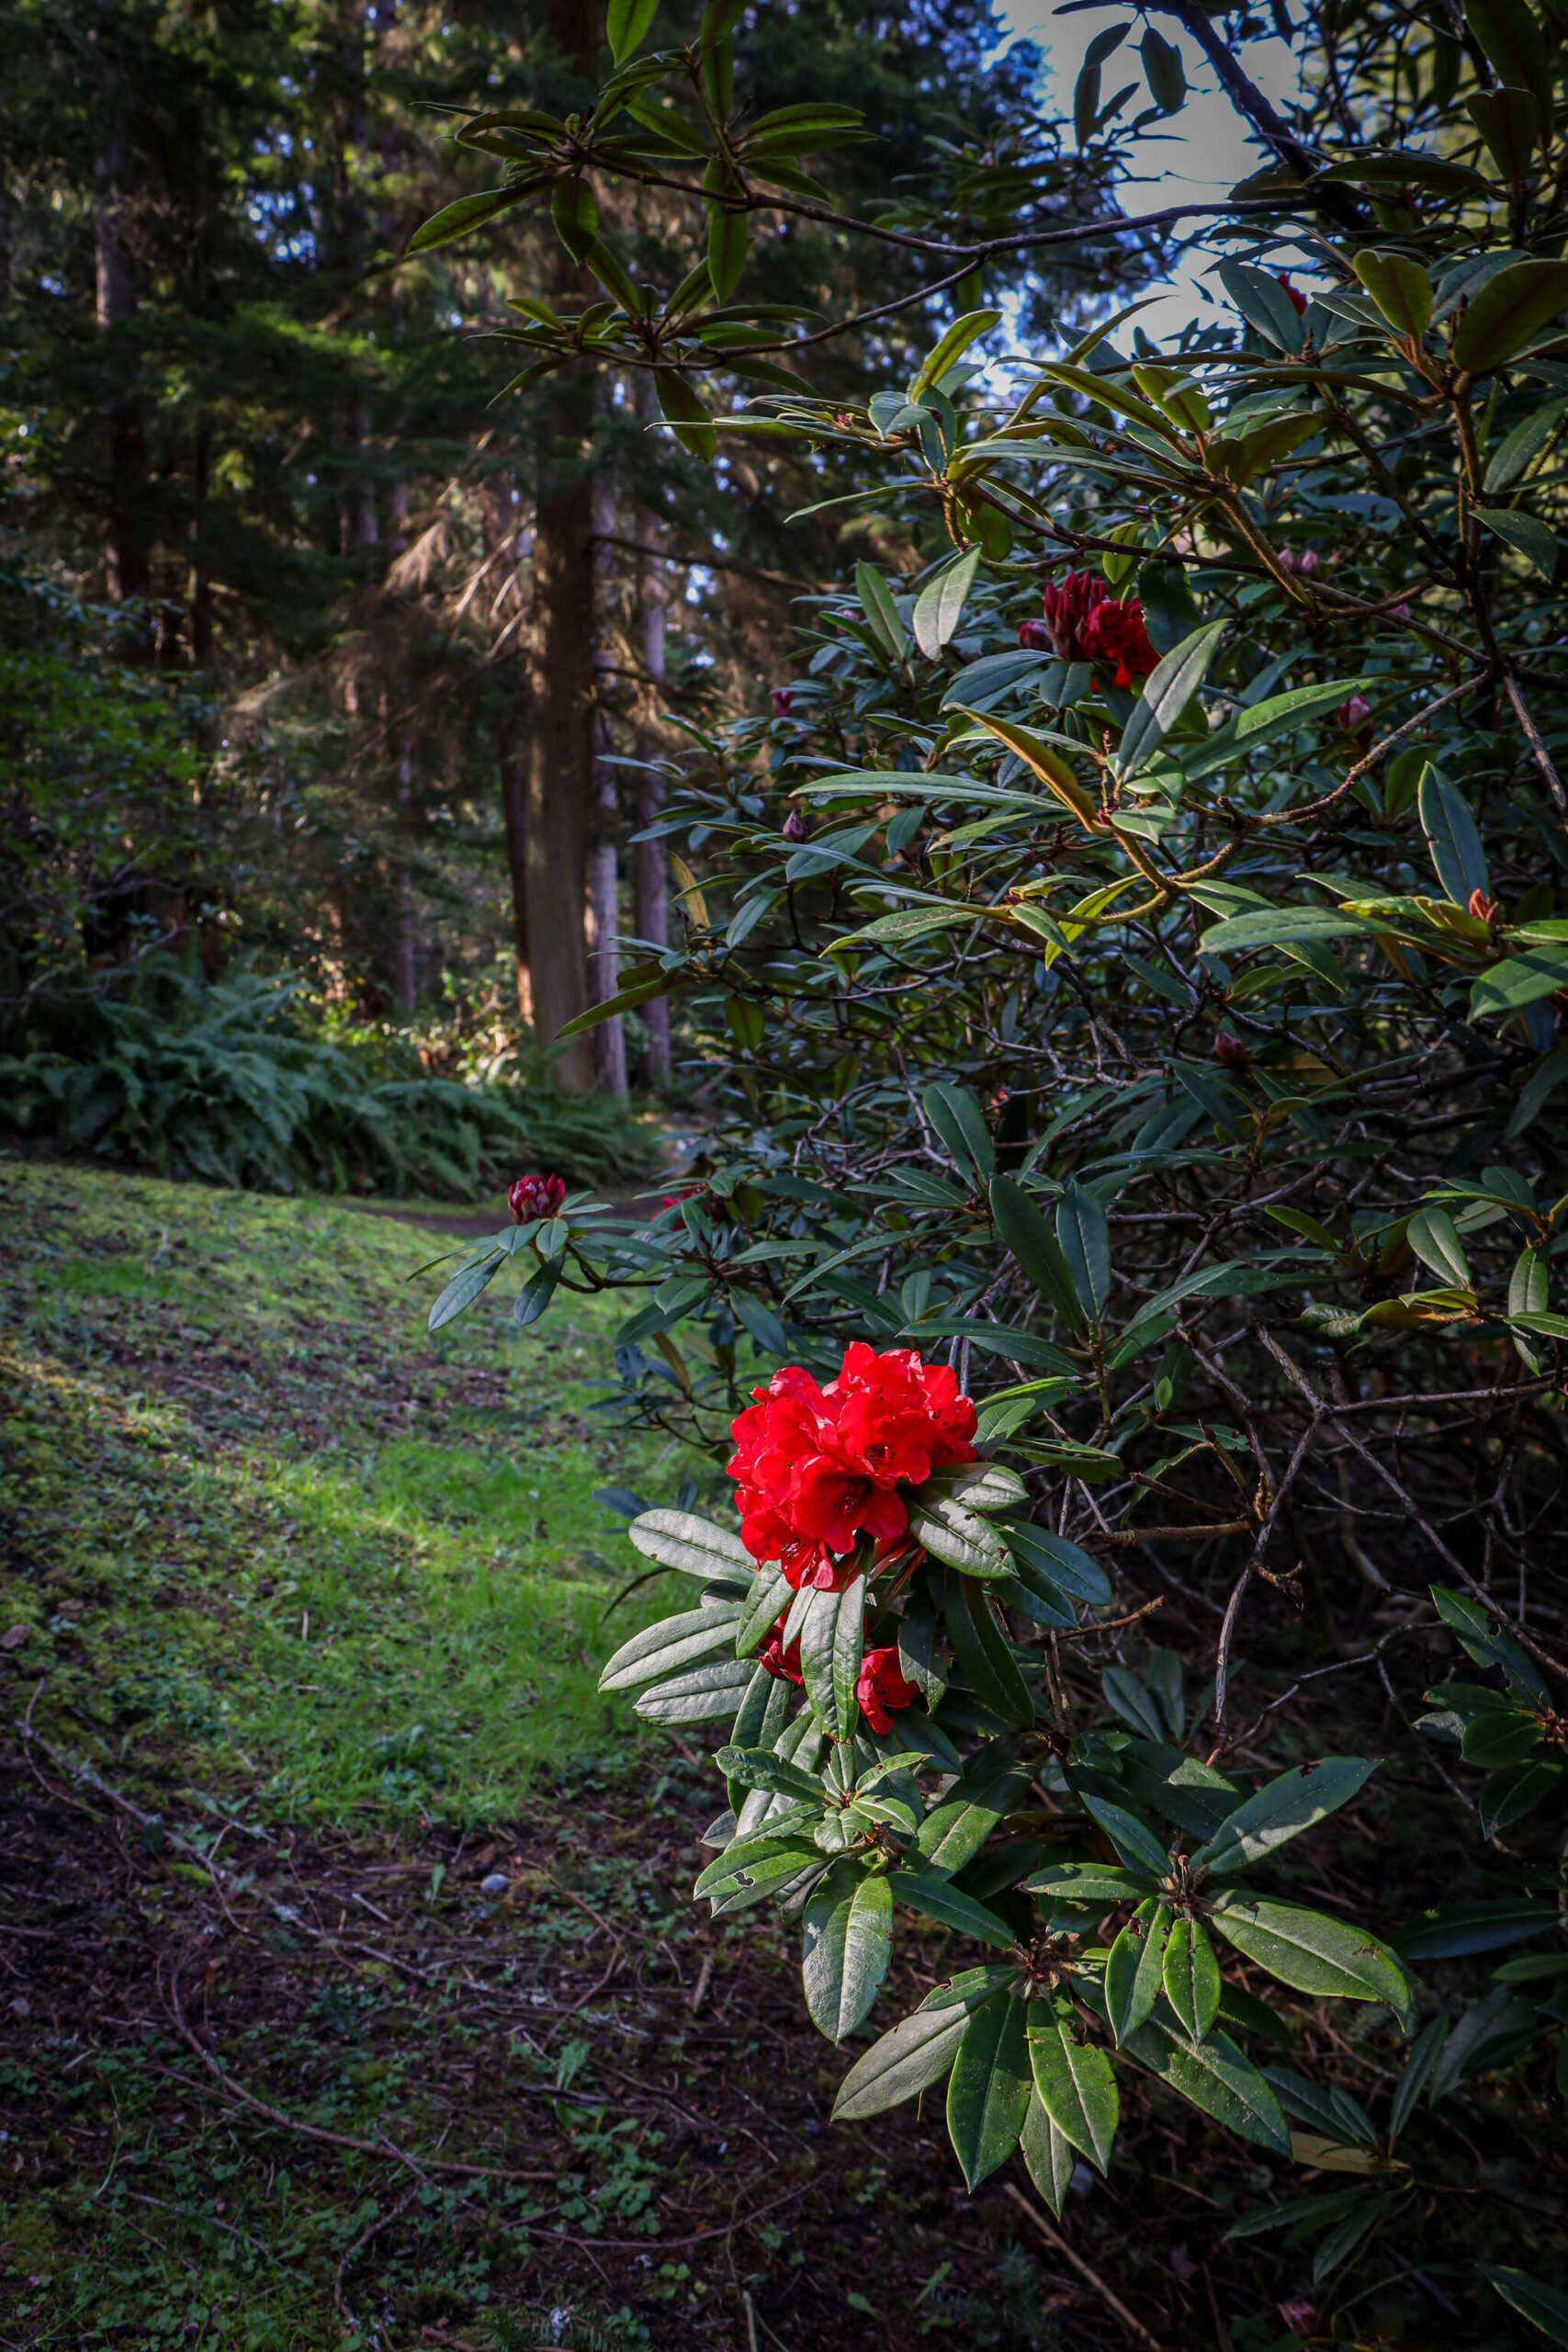 Rhododendron Taurus bloom at Meerkerk Gardens in March. (Photo by Cynthia Woerner)